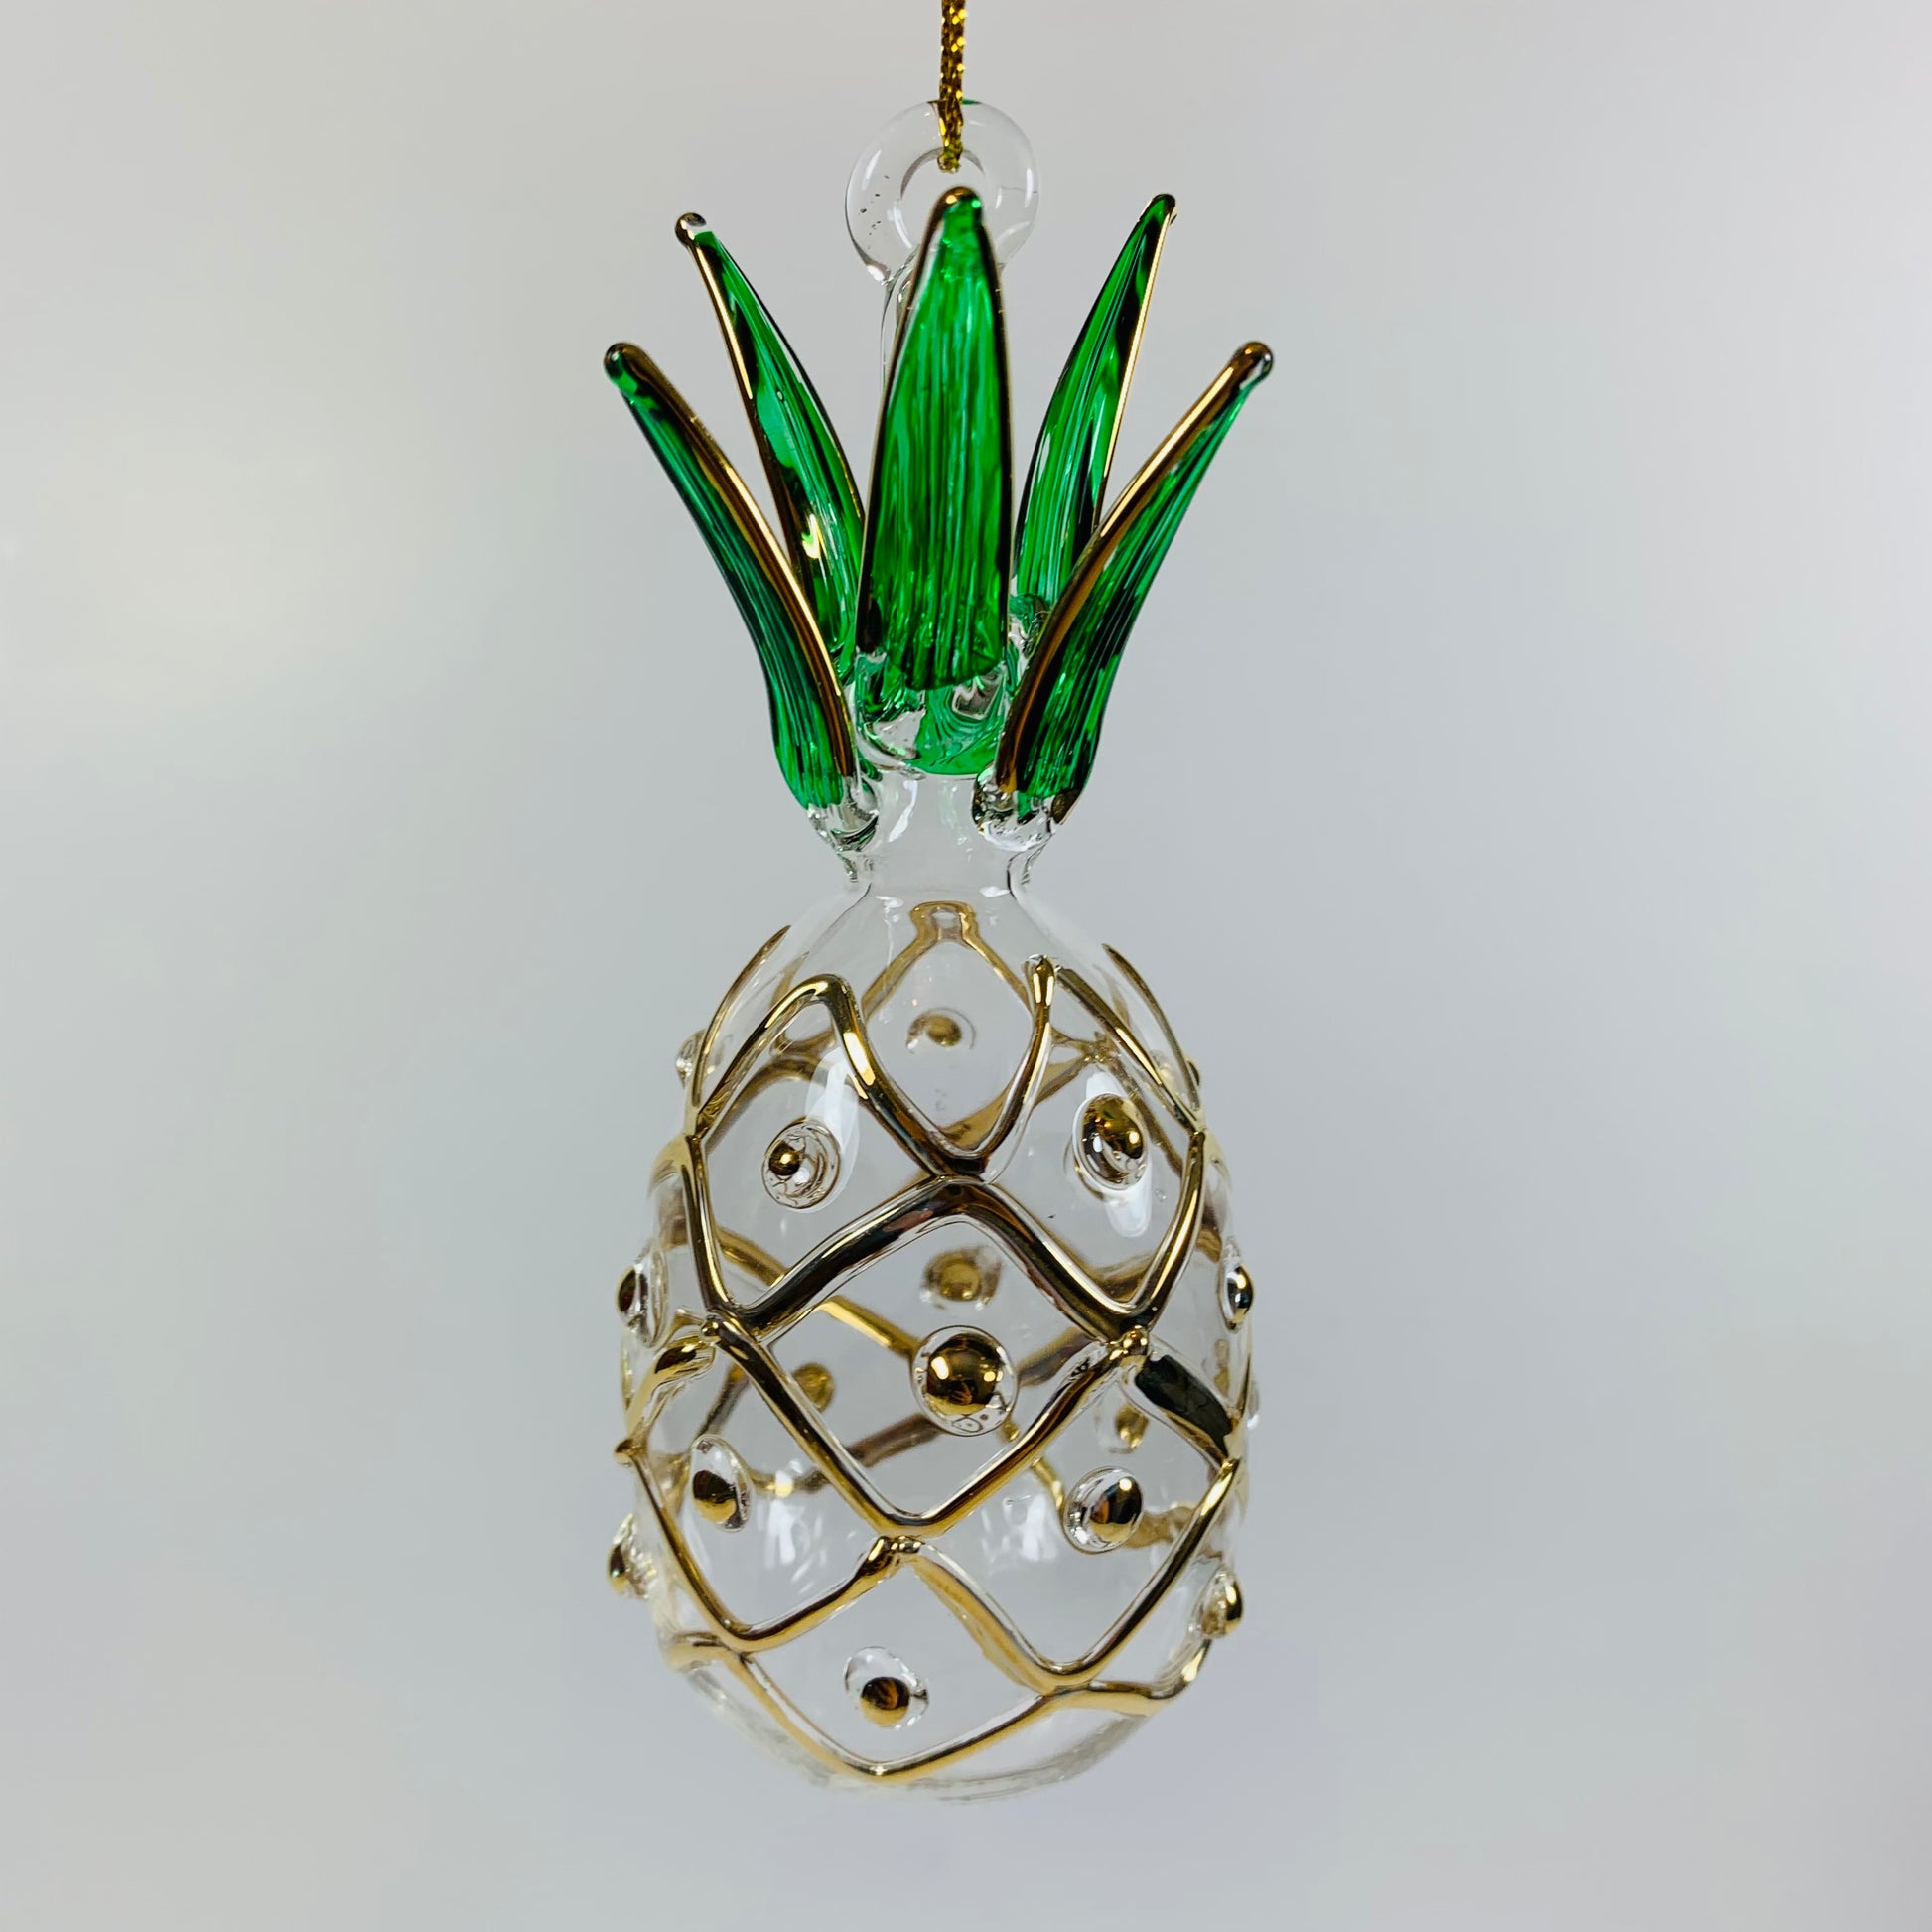 Blown Glass Ornament - Pineapple